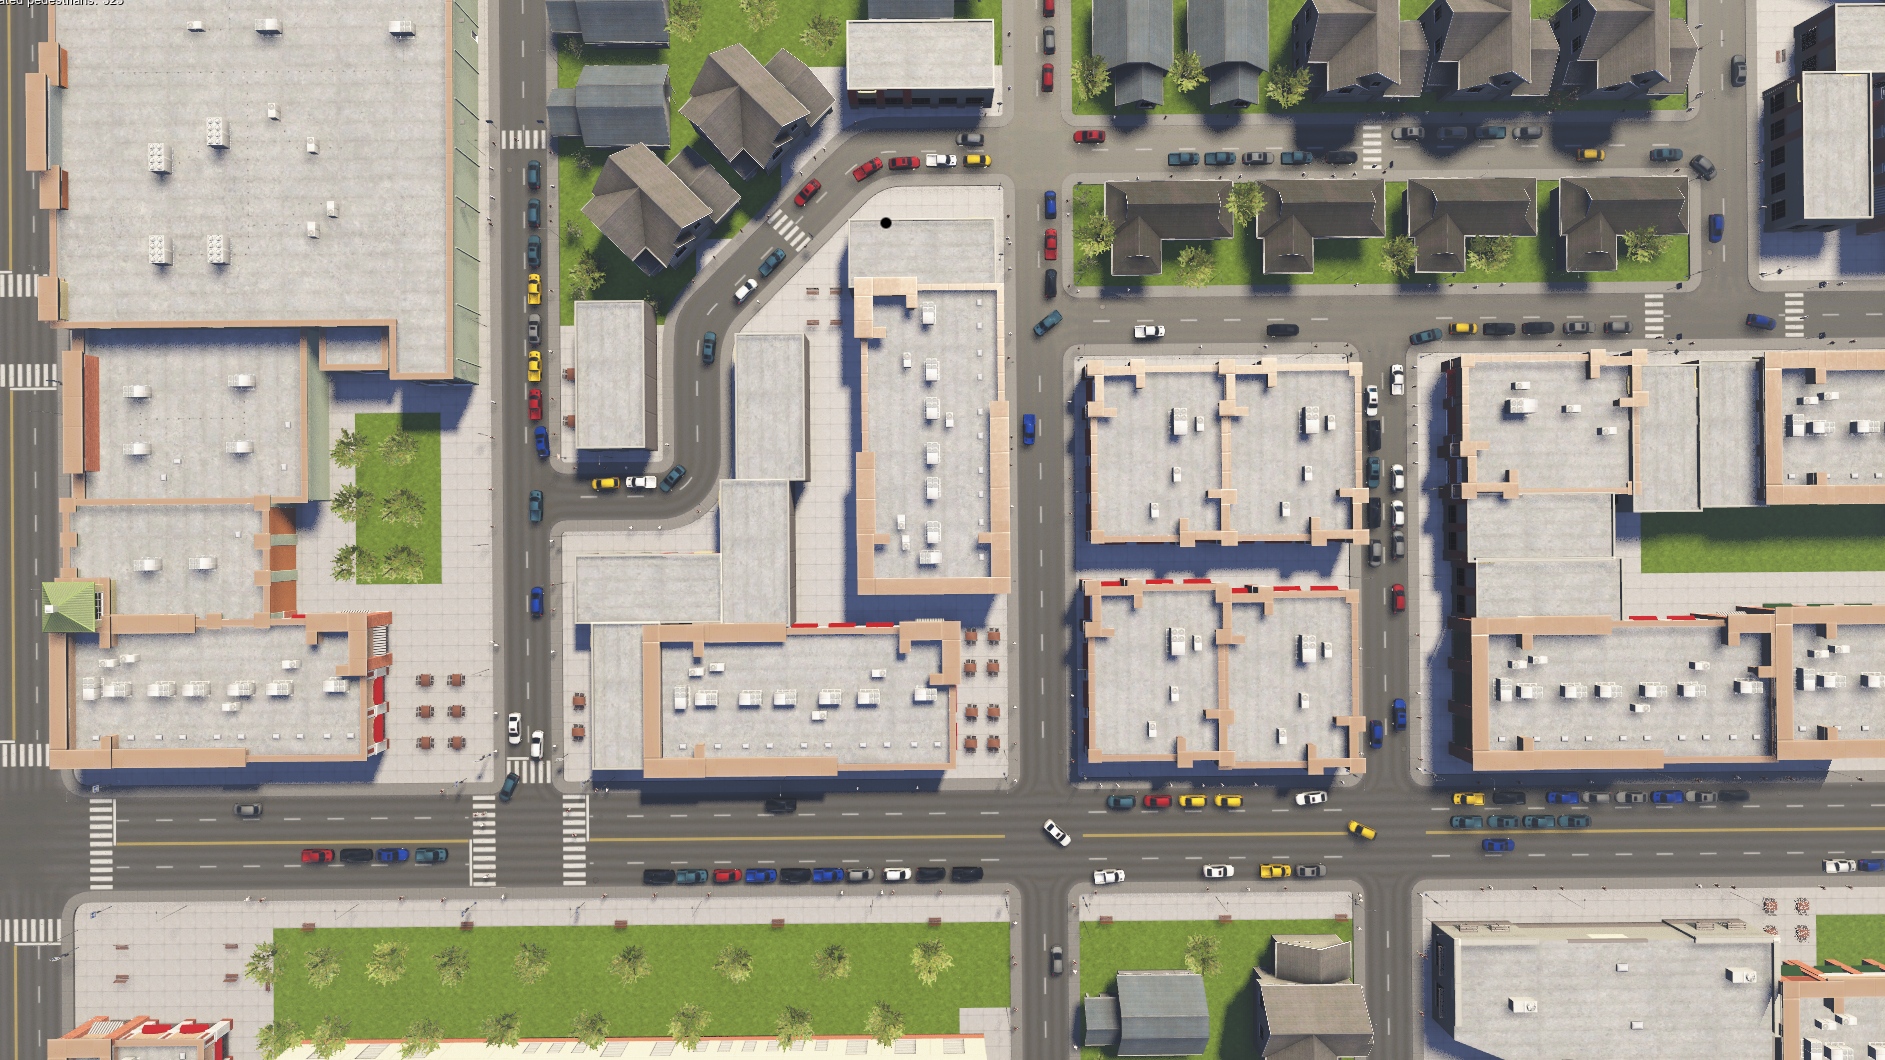 Unigine Develops City Traffic System, A Driving Simulator - Phoronix